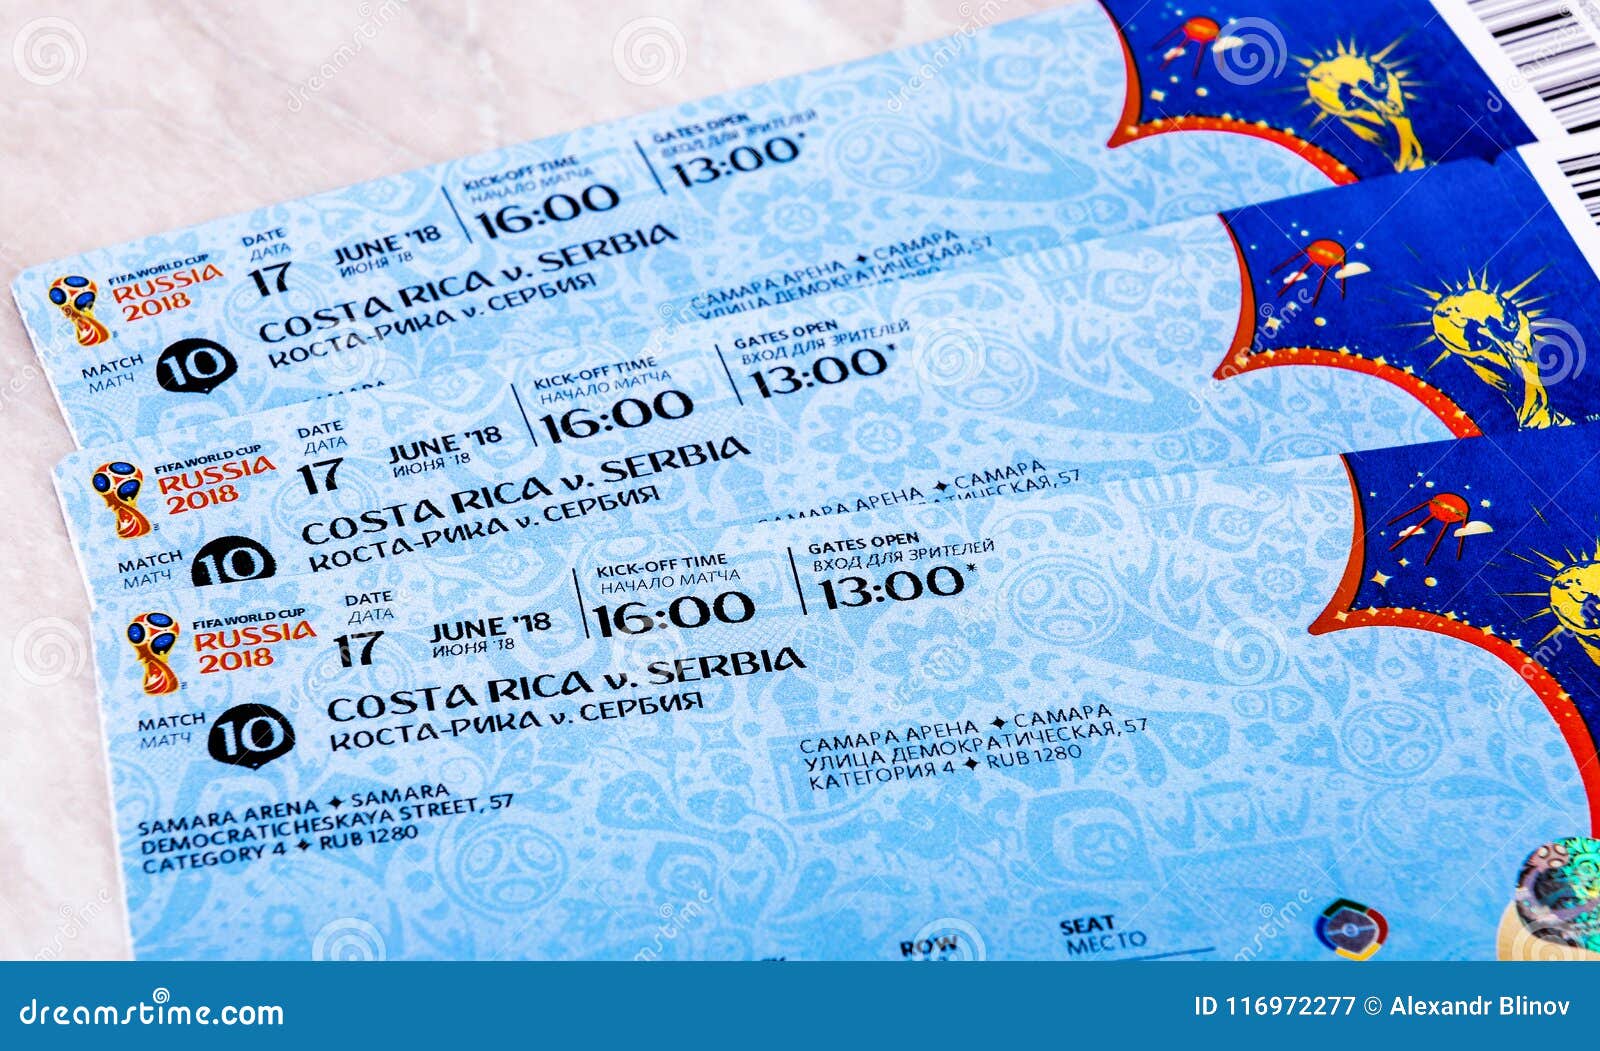 Билет ЧМ 2018. FIFA tickets. Tickets with foto. Tickets russia